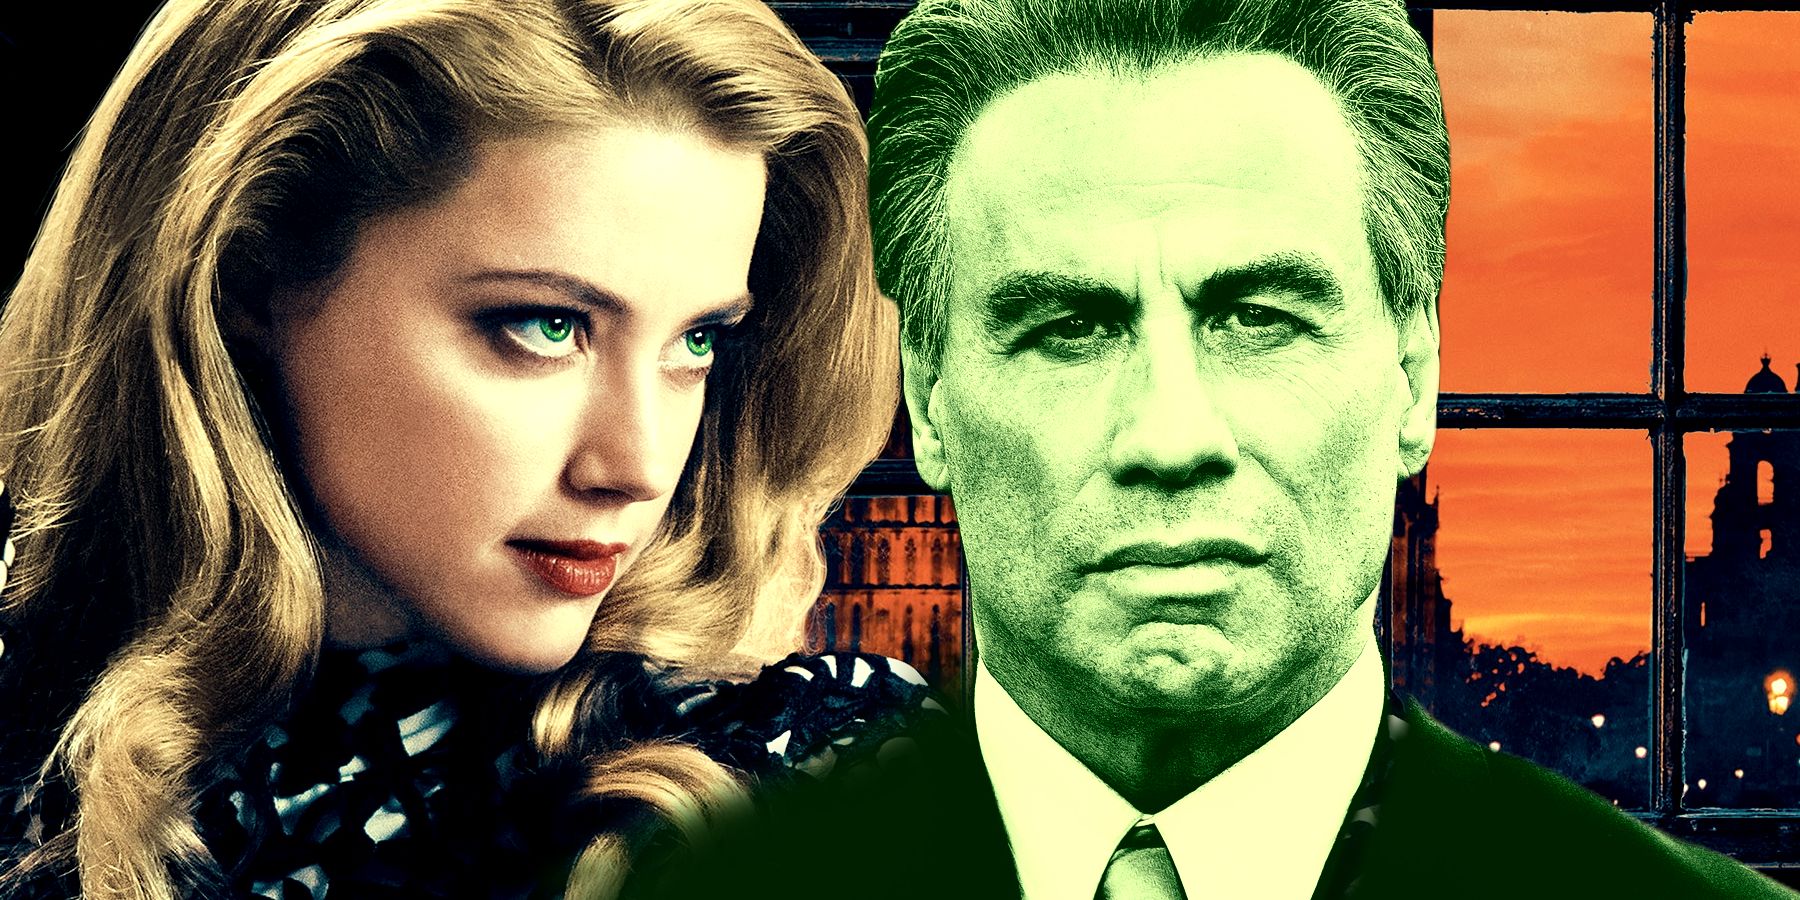 Amber Heard in London Fields (2018) and John Travolta in Gotti (2018)